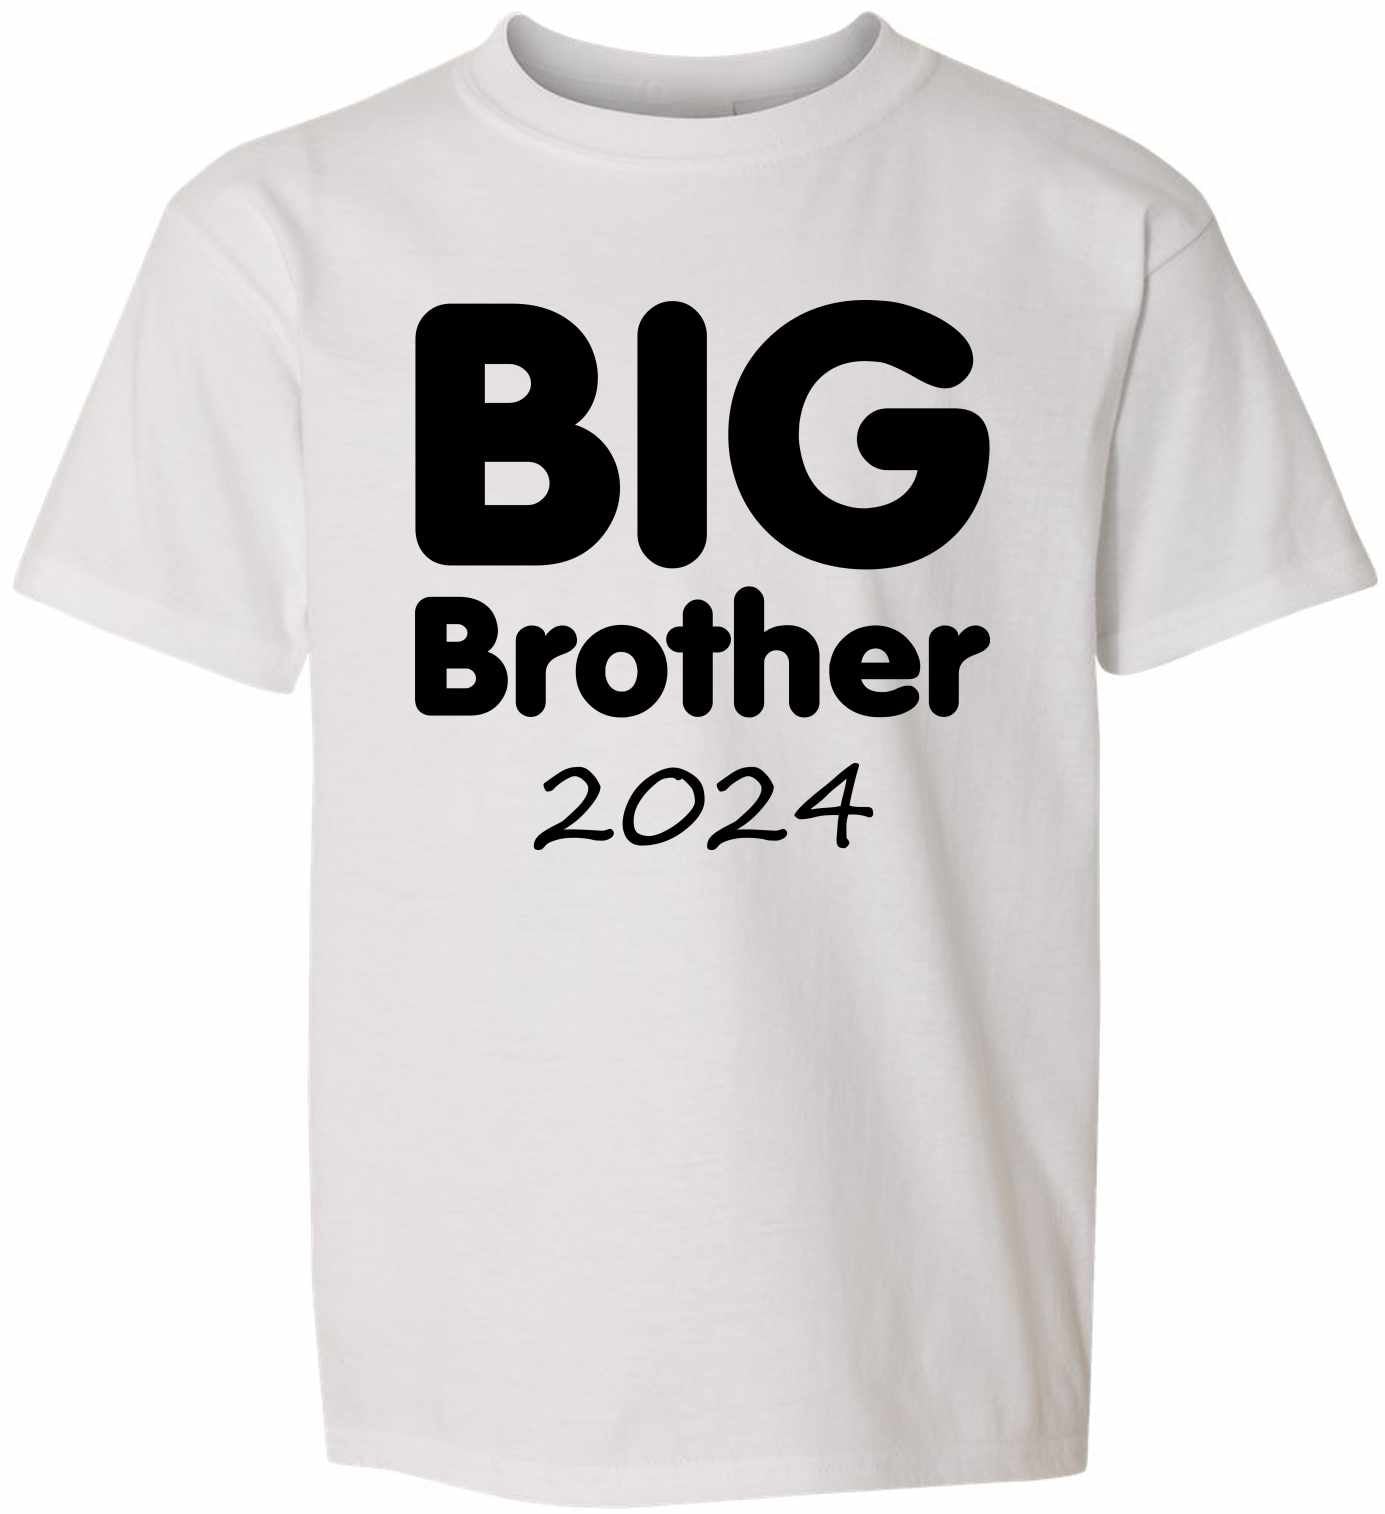 Big Brother 2024 on Kids T-Shirt